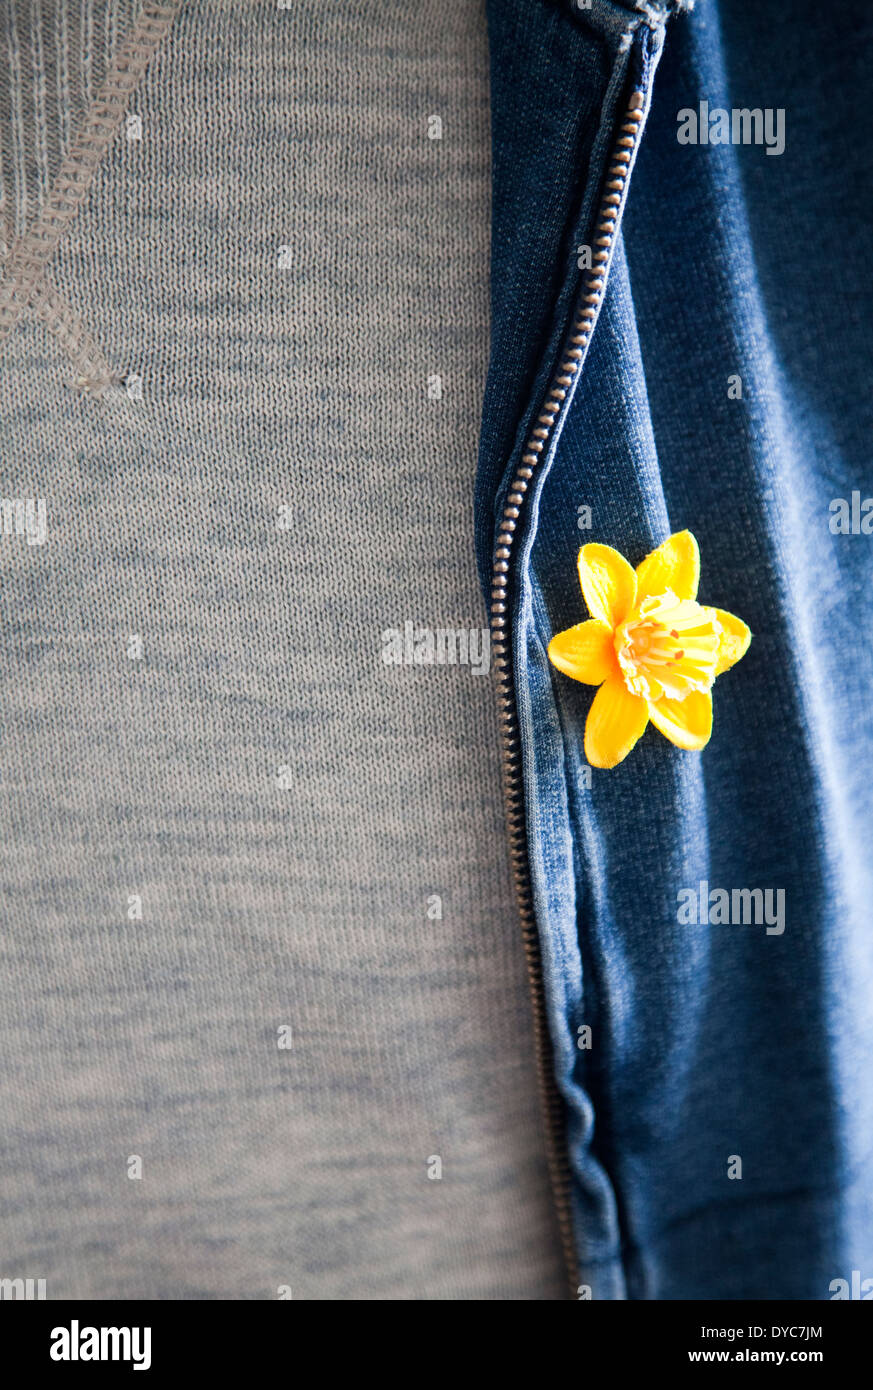 Gelbe Narzisse Pin auf Kleidung für Marie Curie Cancer Charity - UK Stockfoto